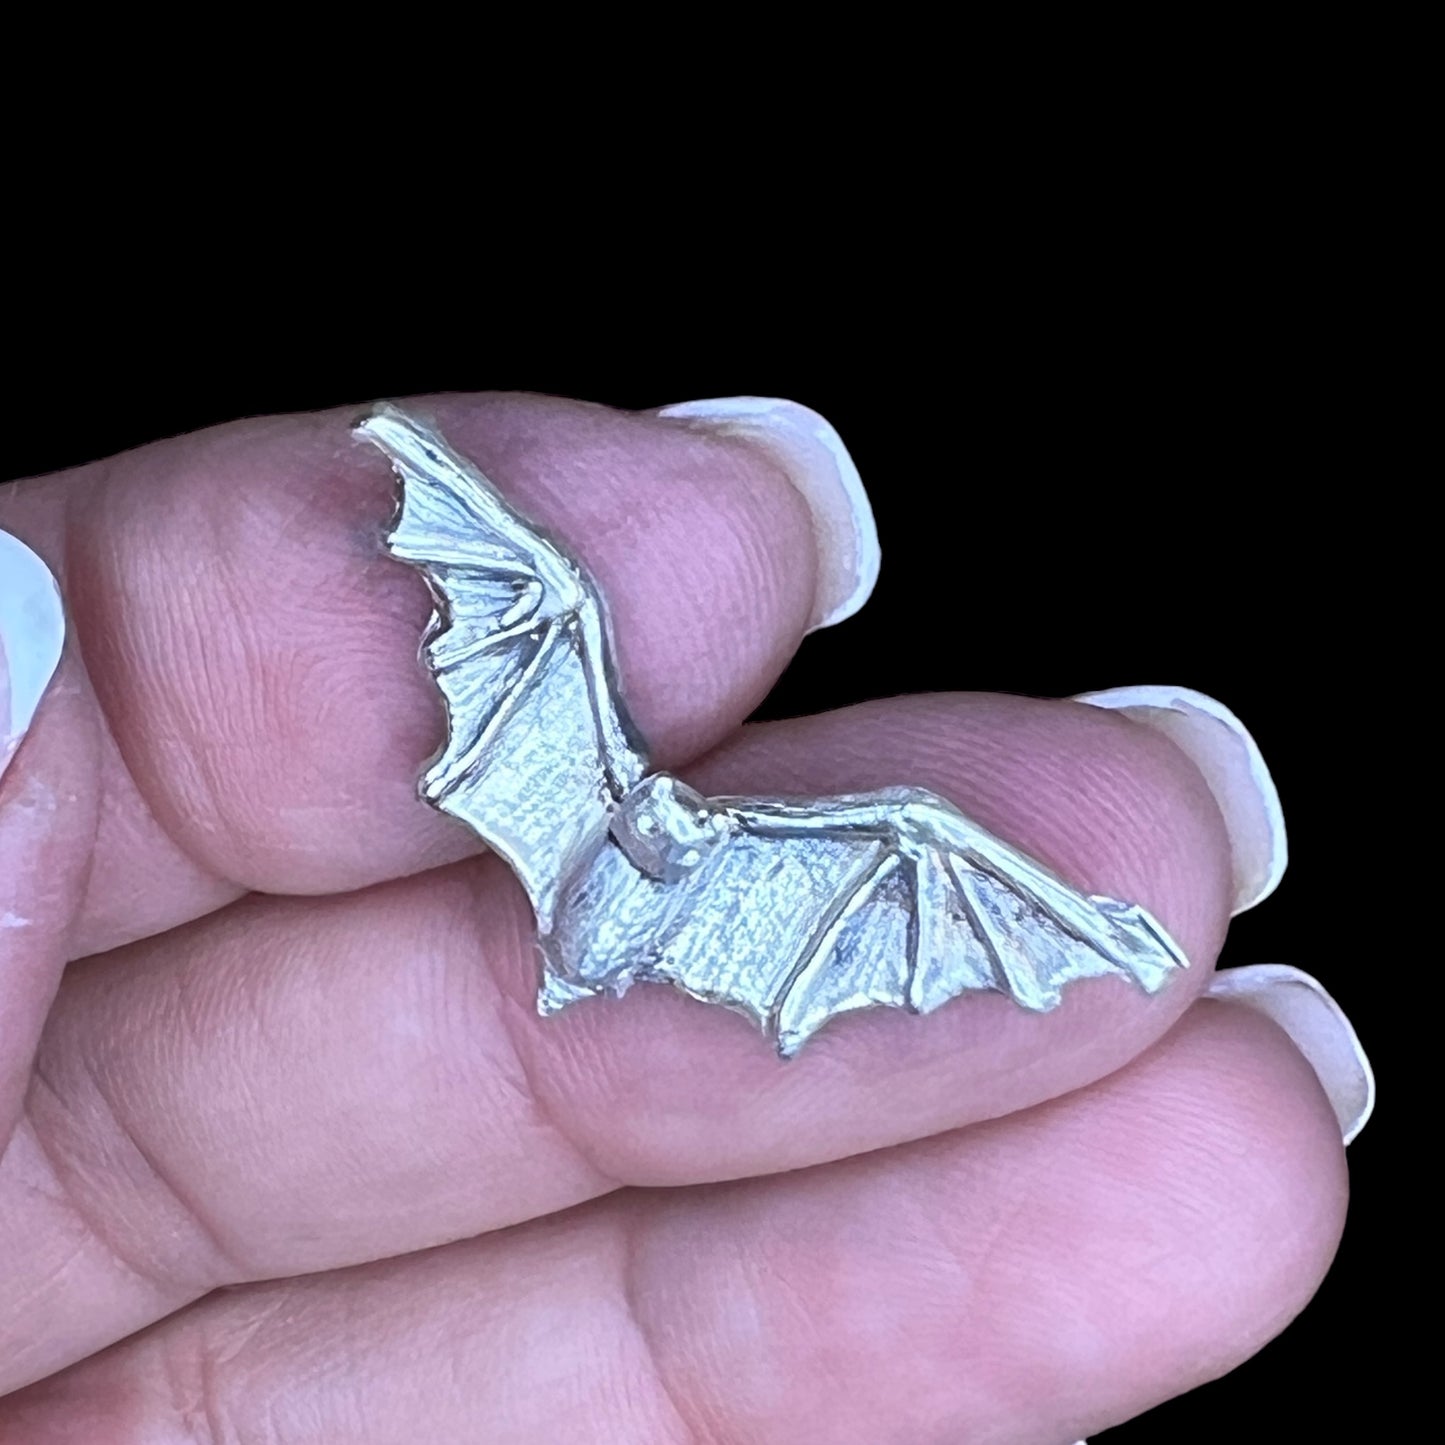 Bat for jewelry design